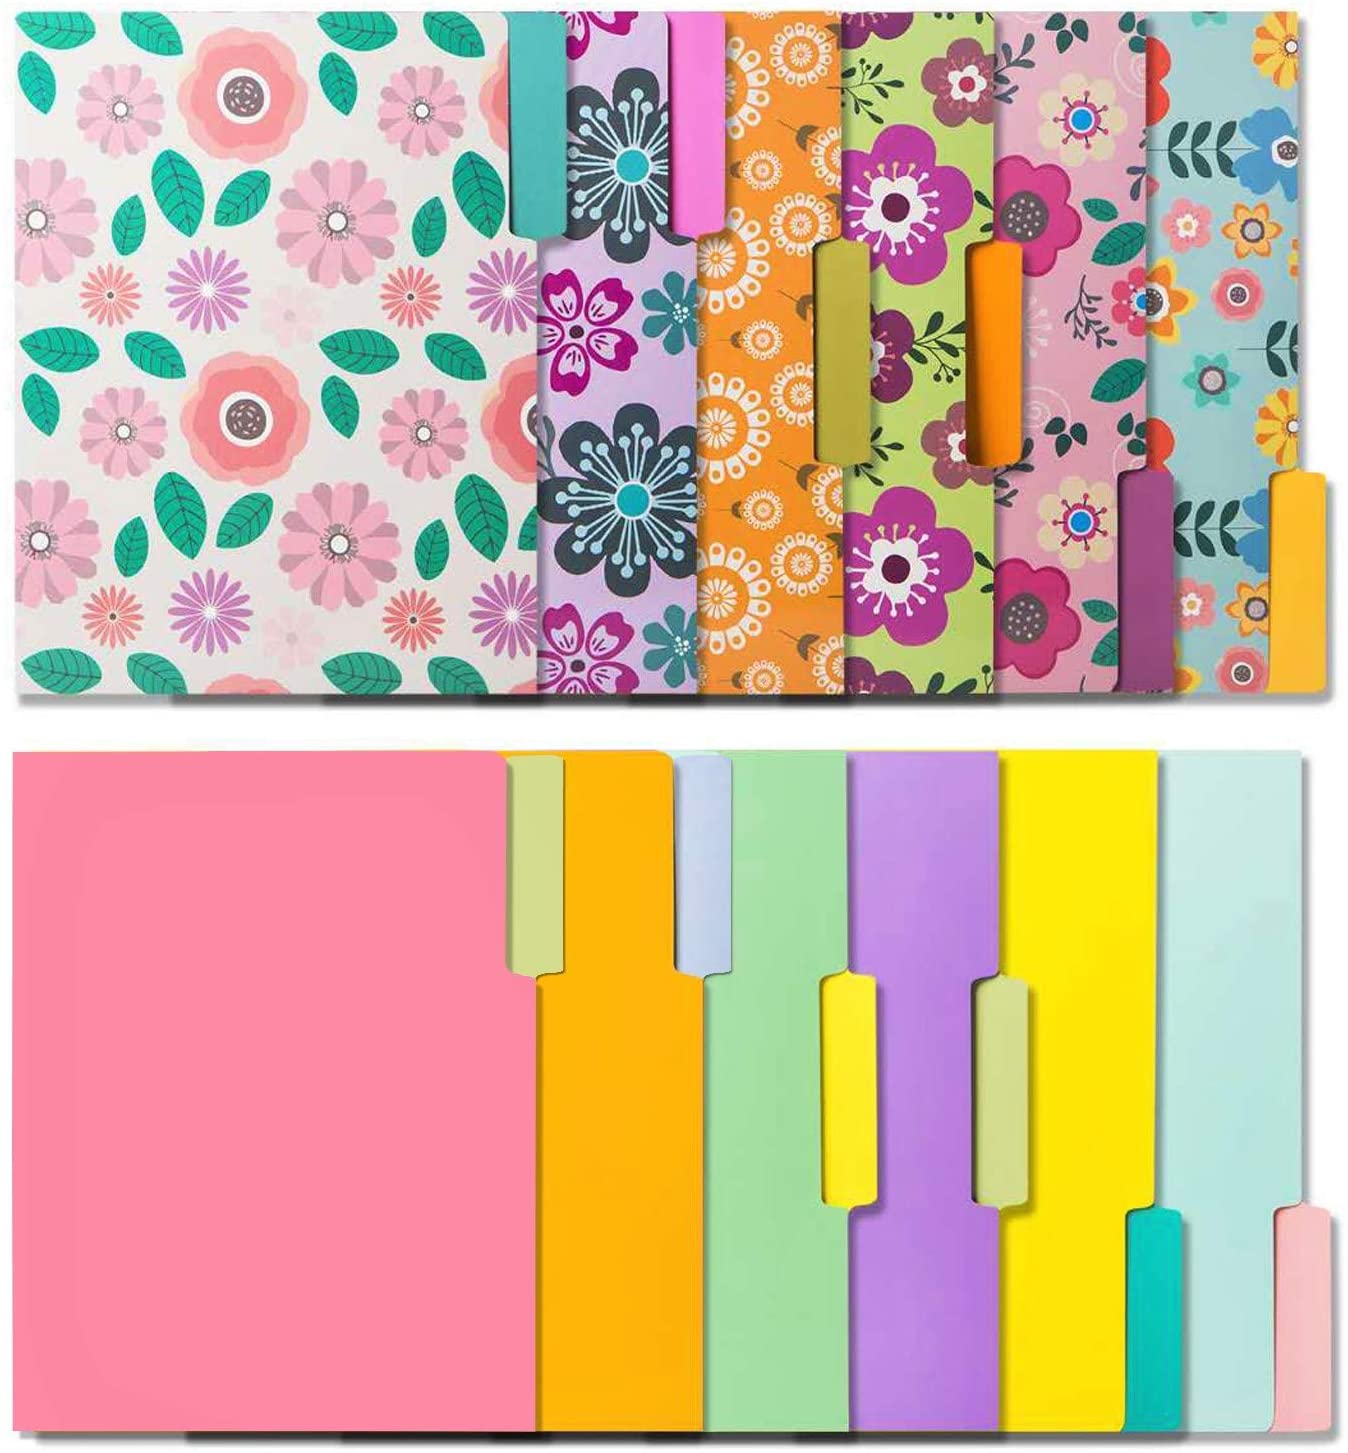 12 Cute File Folders -Floral File Folders & Colored File Folders in Vibrant Colors -Decorative File Folders -Pretty File Folders- 300 gsm Thick, Letter Size File Folders - 9.5 x 11.5 inch (Pack of 12)